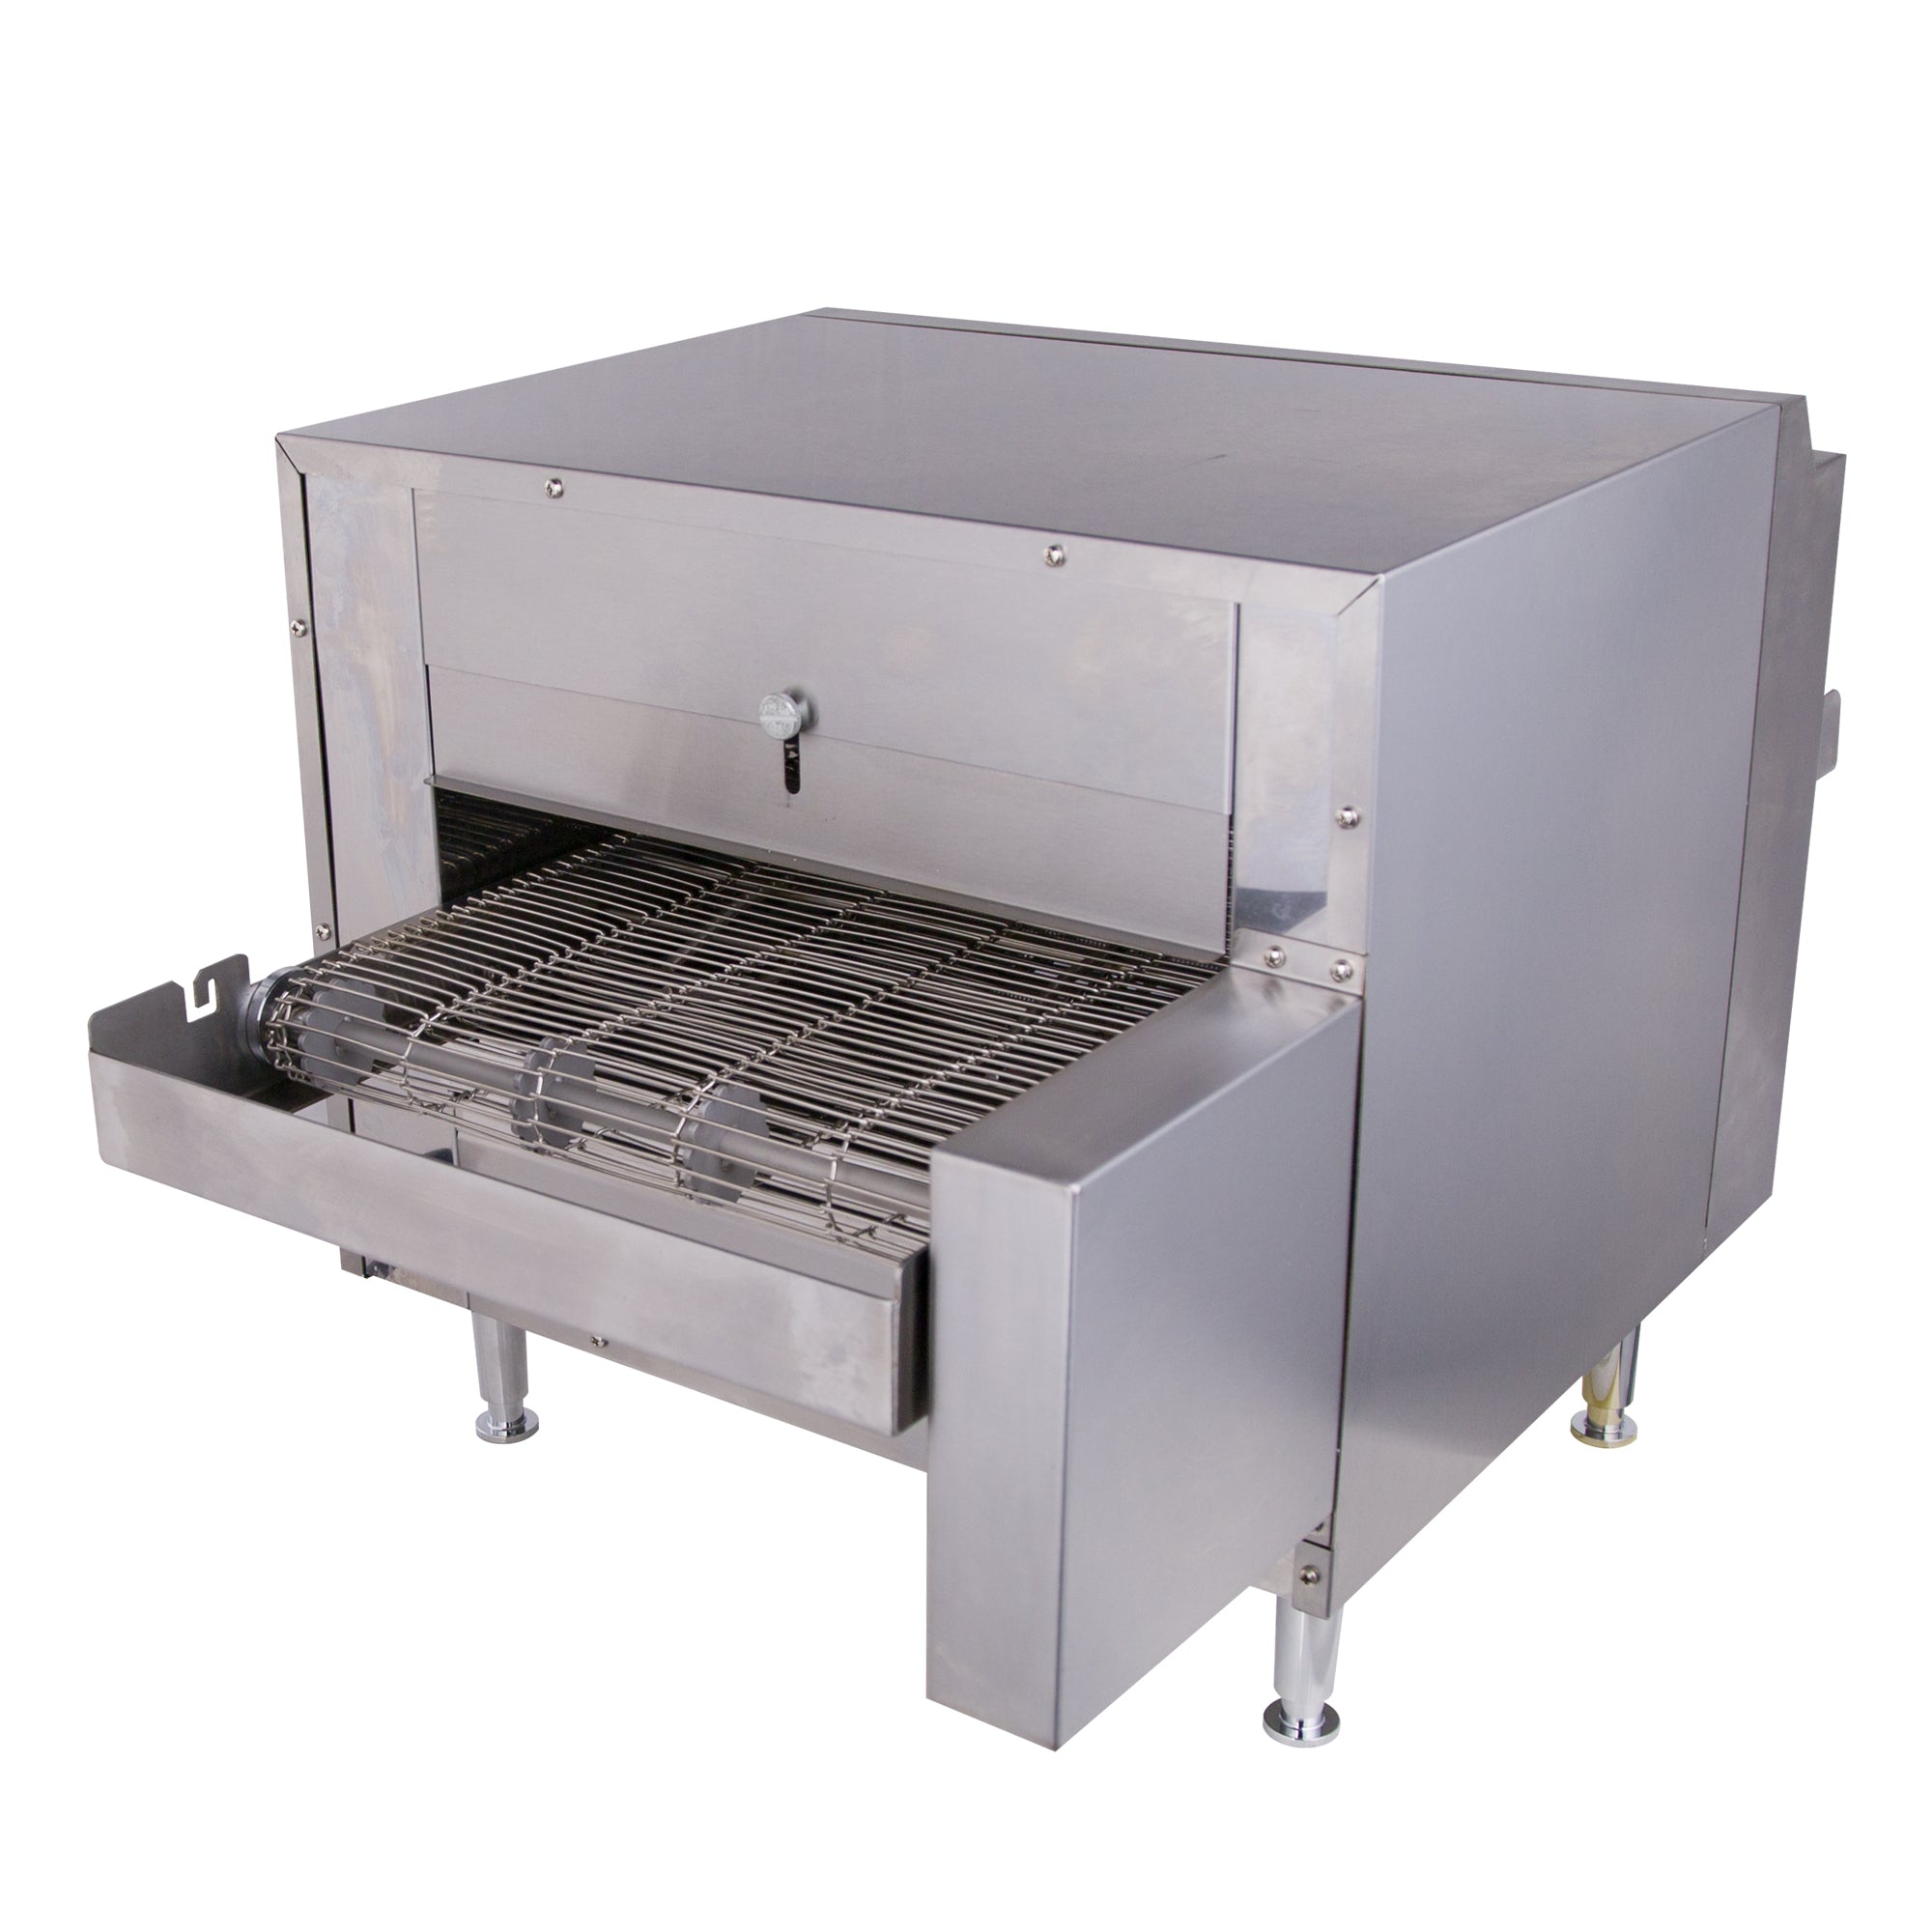 EasyRose Conveyor Commercial Pizza Oven 50-300 °C /122- 572°F Temperature Range for Bakery Western Restaurant - 208V 2800W (10.5”wide be lt)